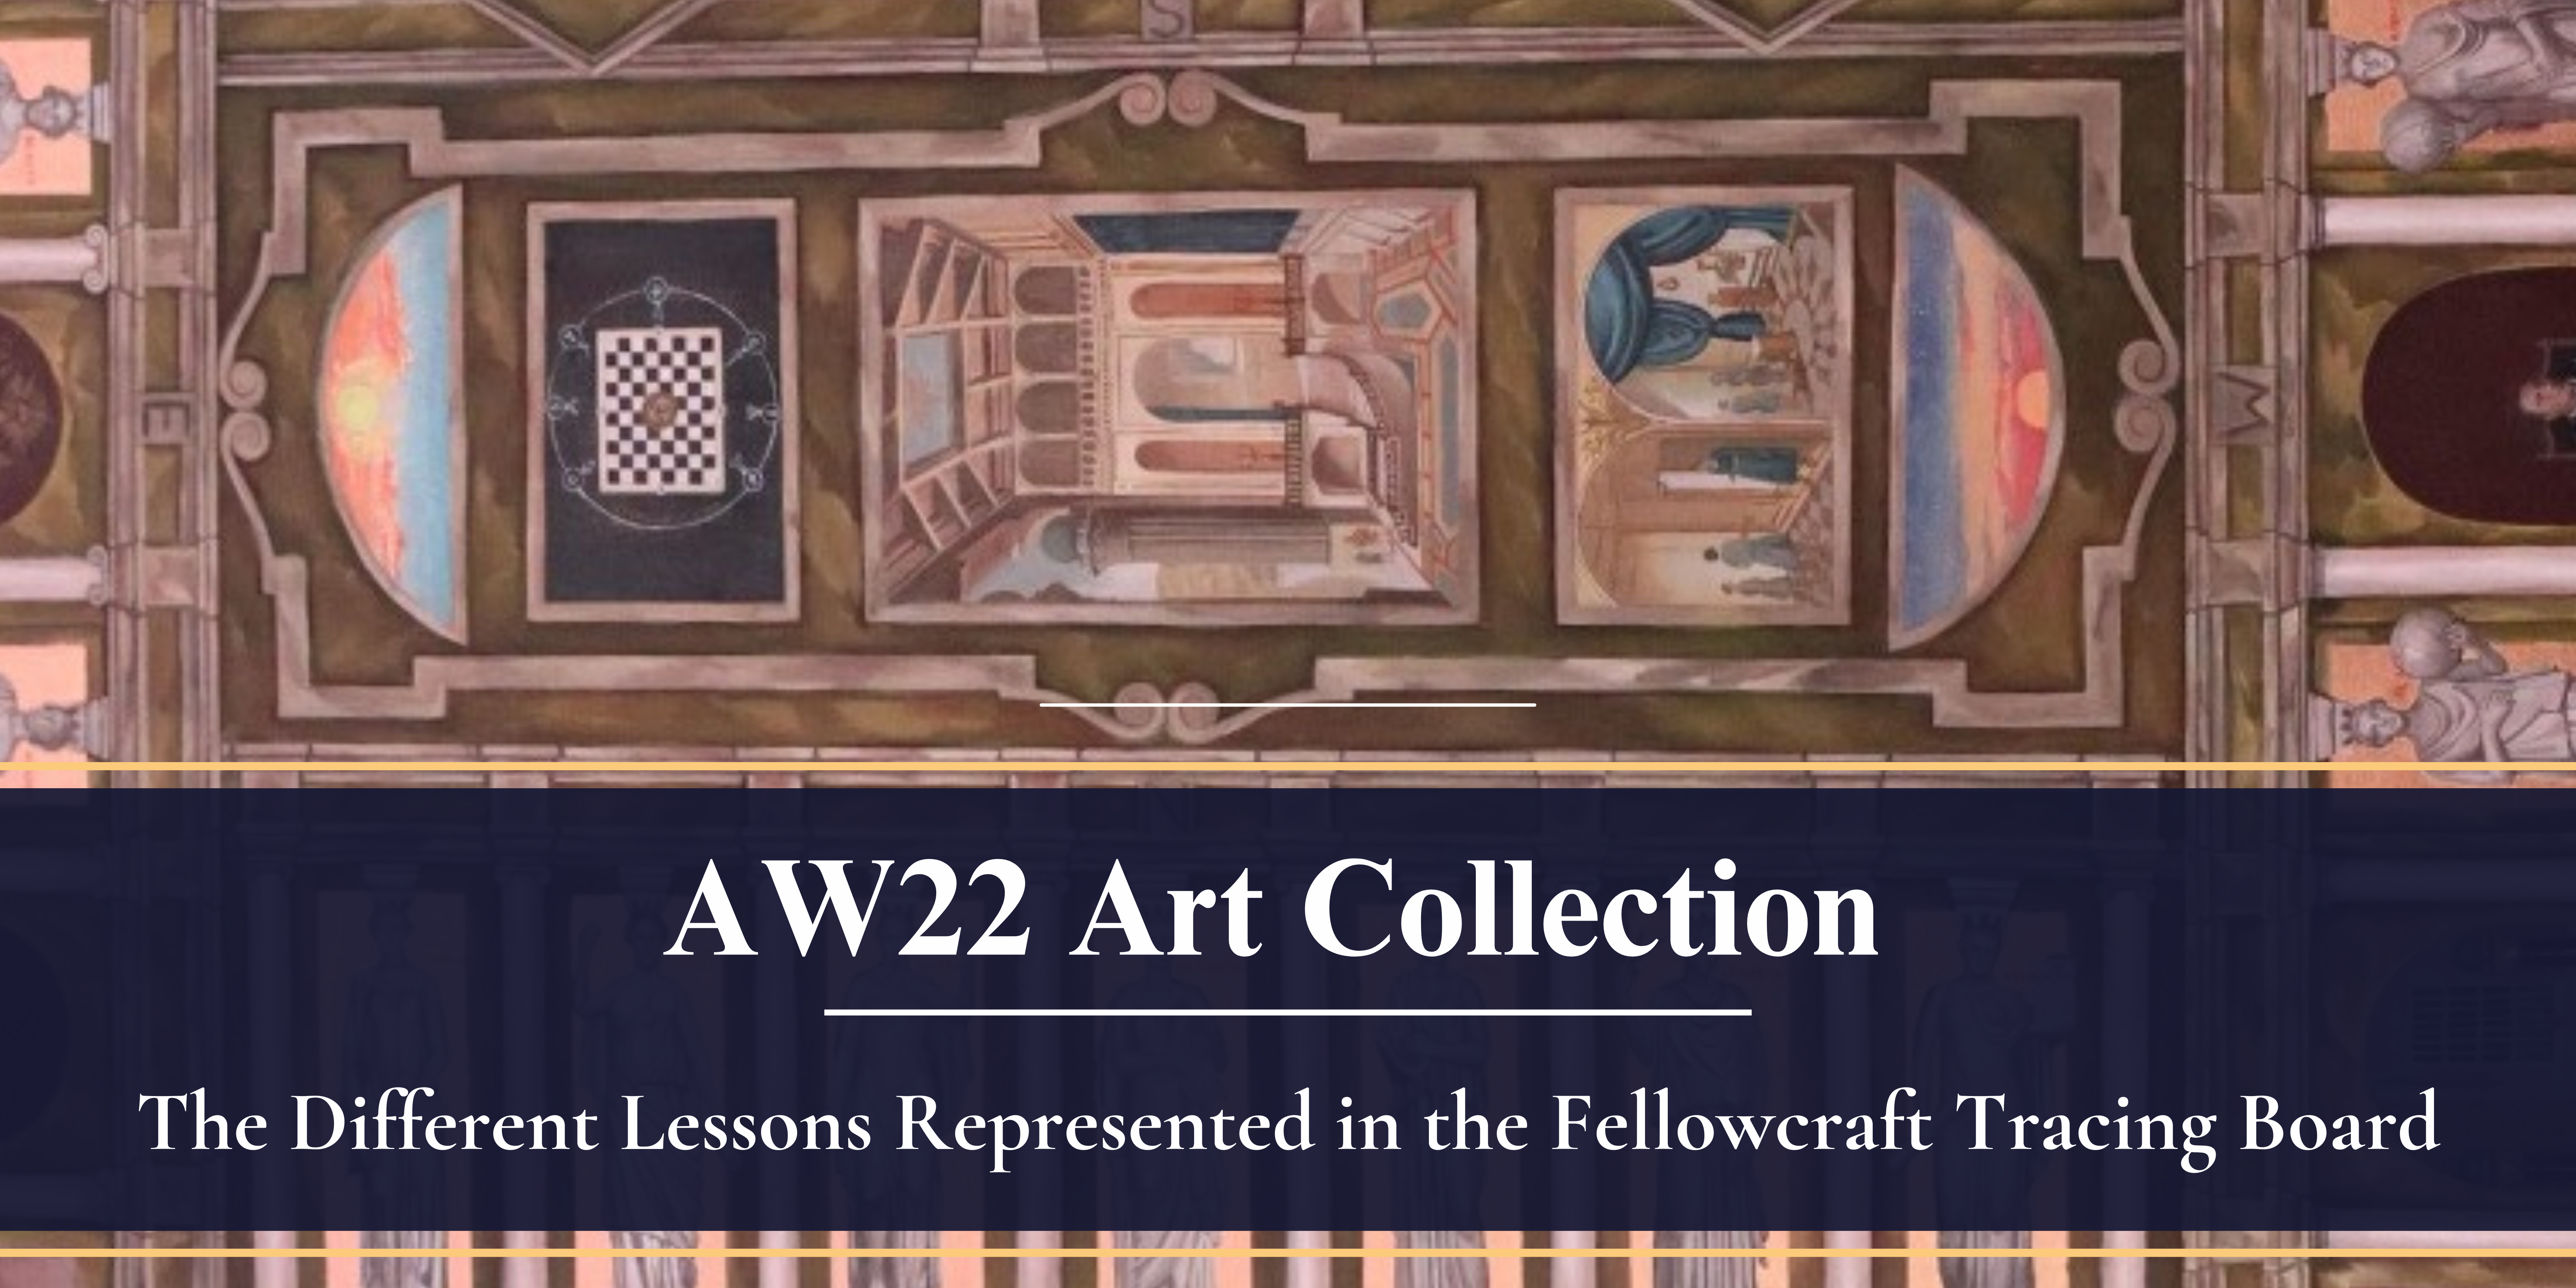 The AW22 Fellowcraft Tracing Board - Alexandria-Washington Lodge